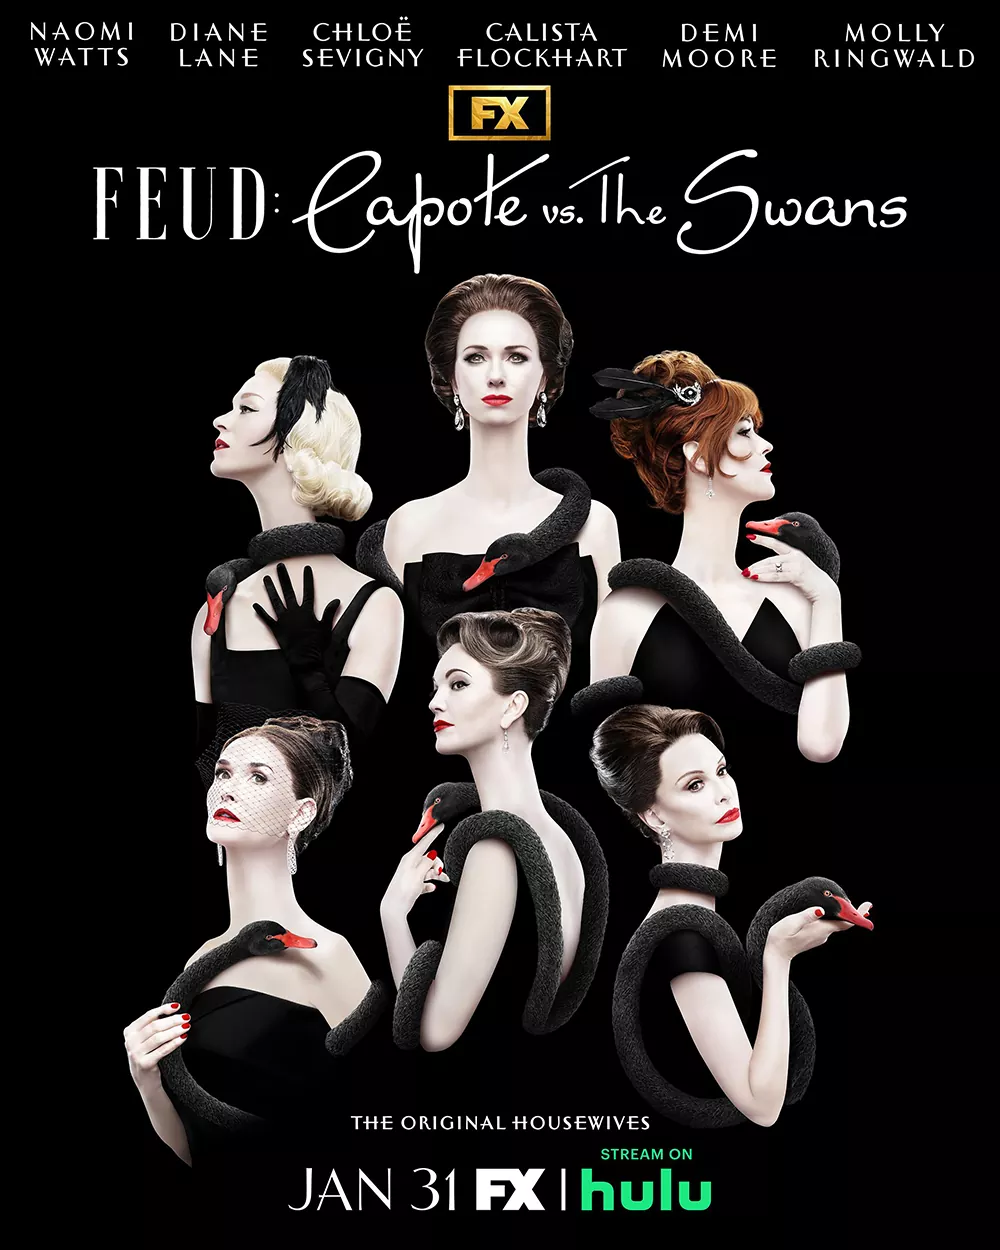 Trailer Από Το "Feud Capote Vs. The Swans"